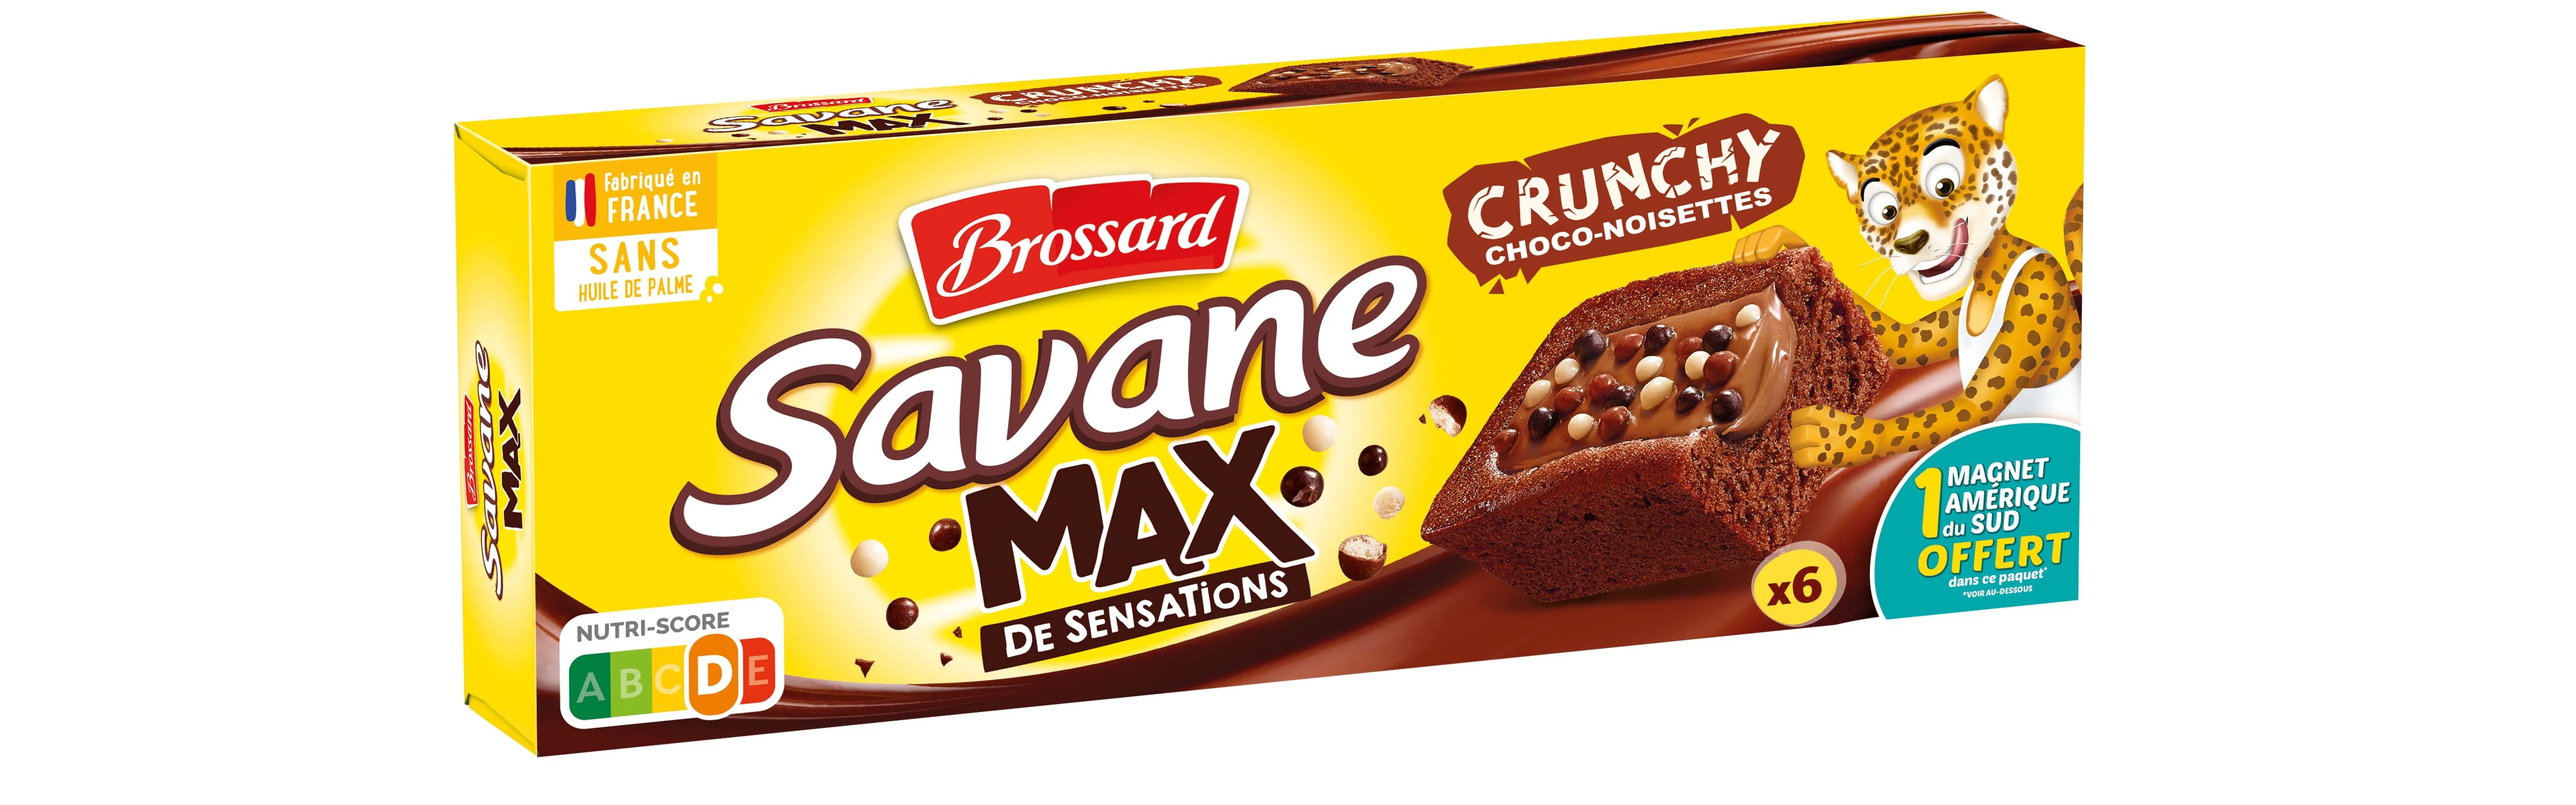 Savane Max Crunchy X6 180g